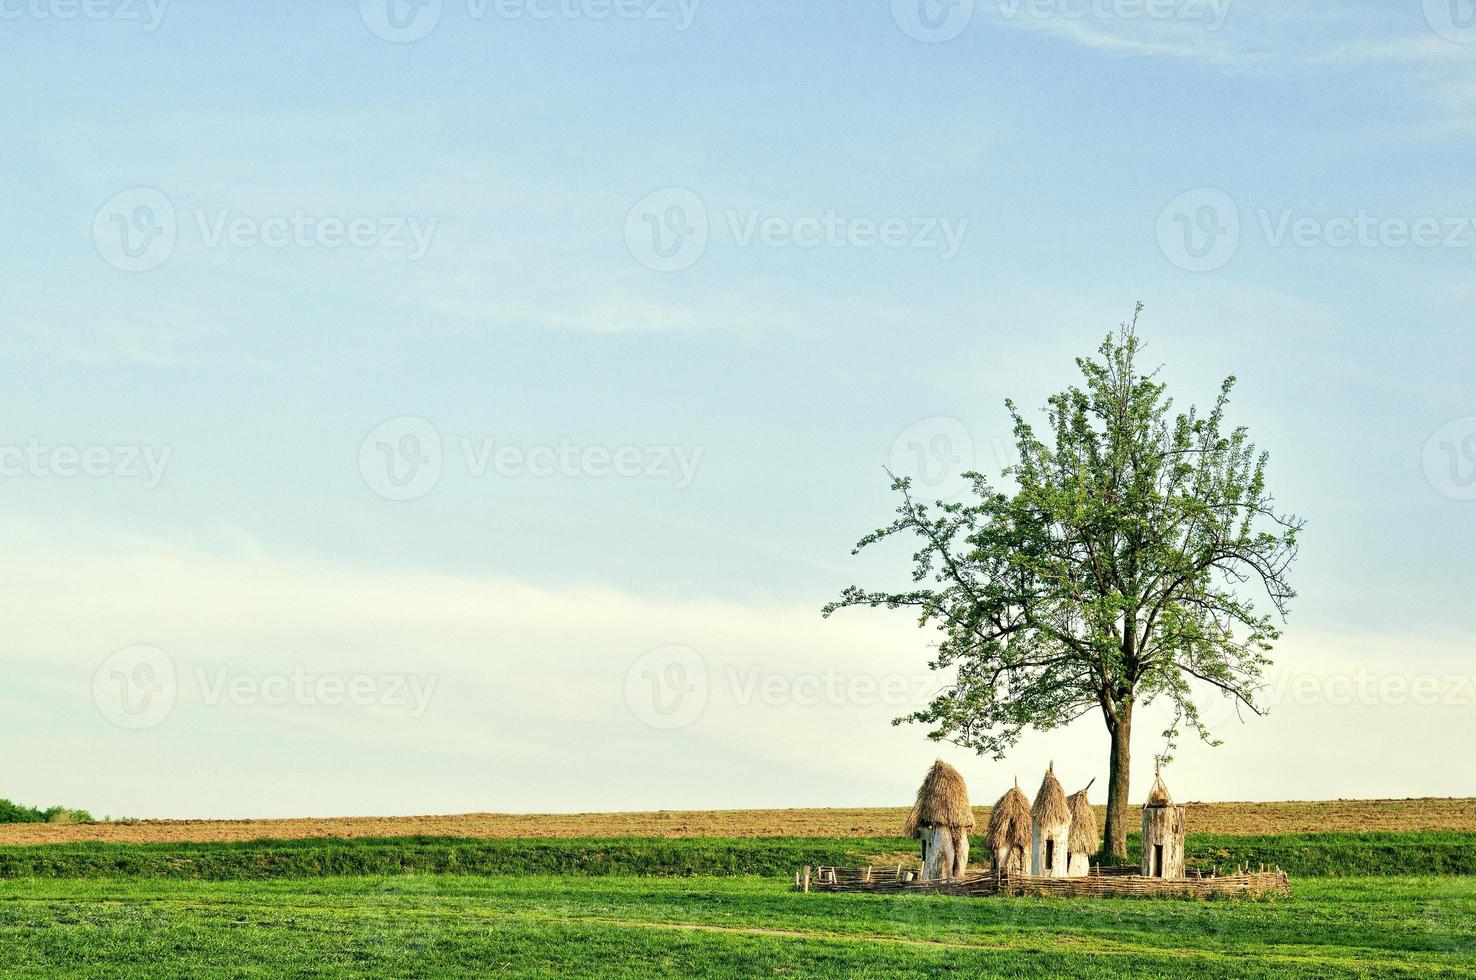 Ukrainian wooden hives in a field under a tree photo